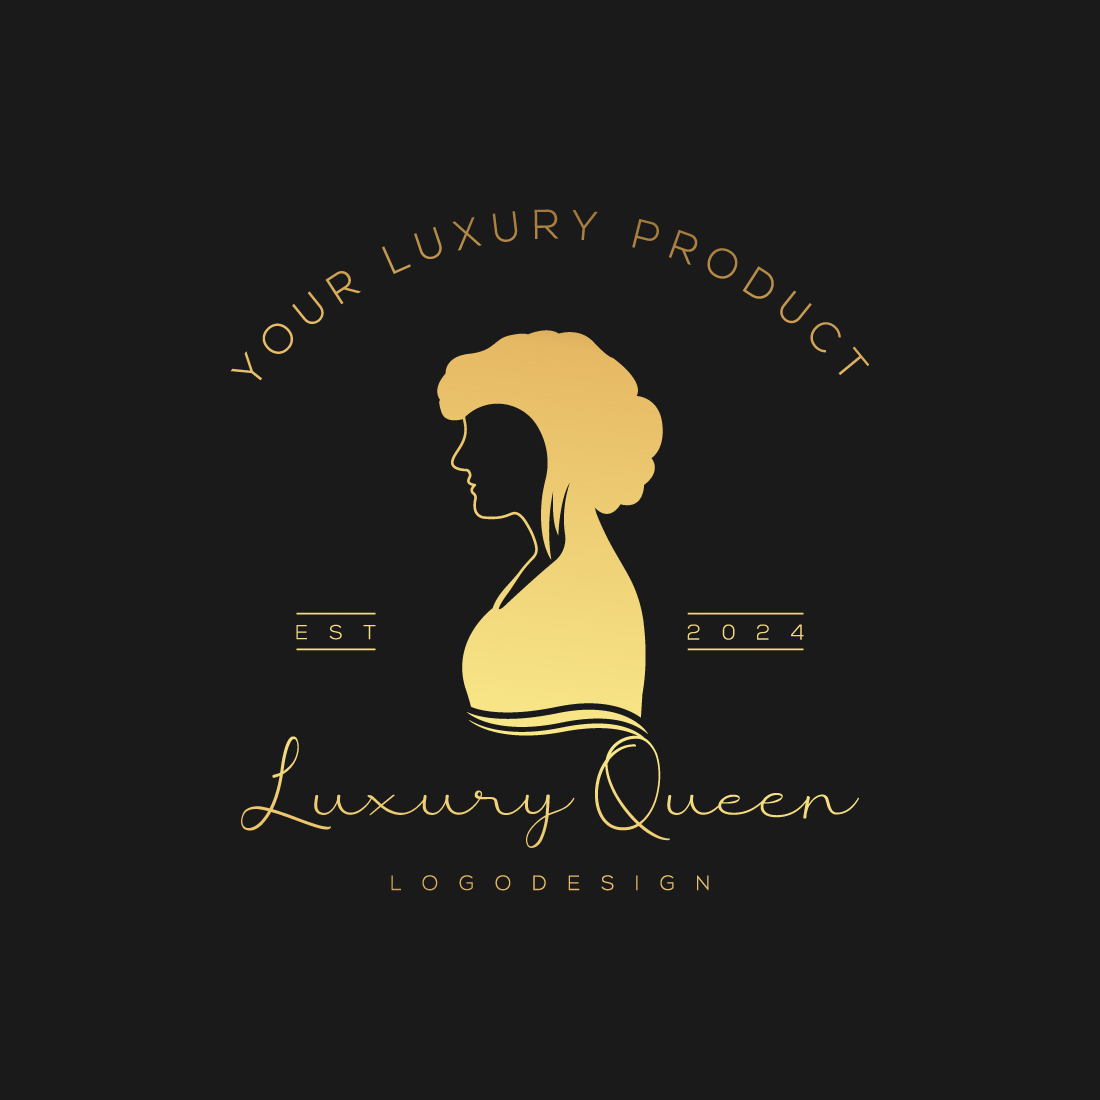 Golden Color Luxury Urban Logo design cover image.